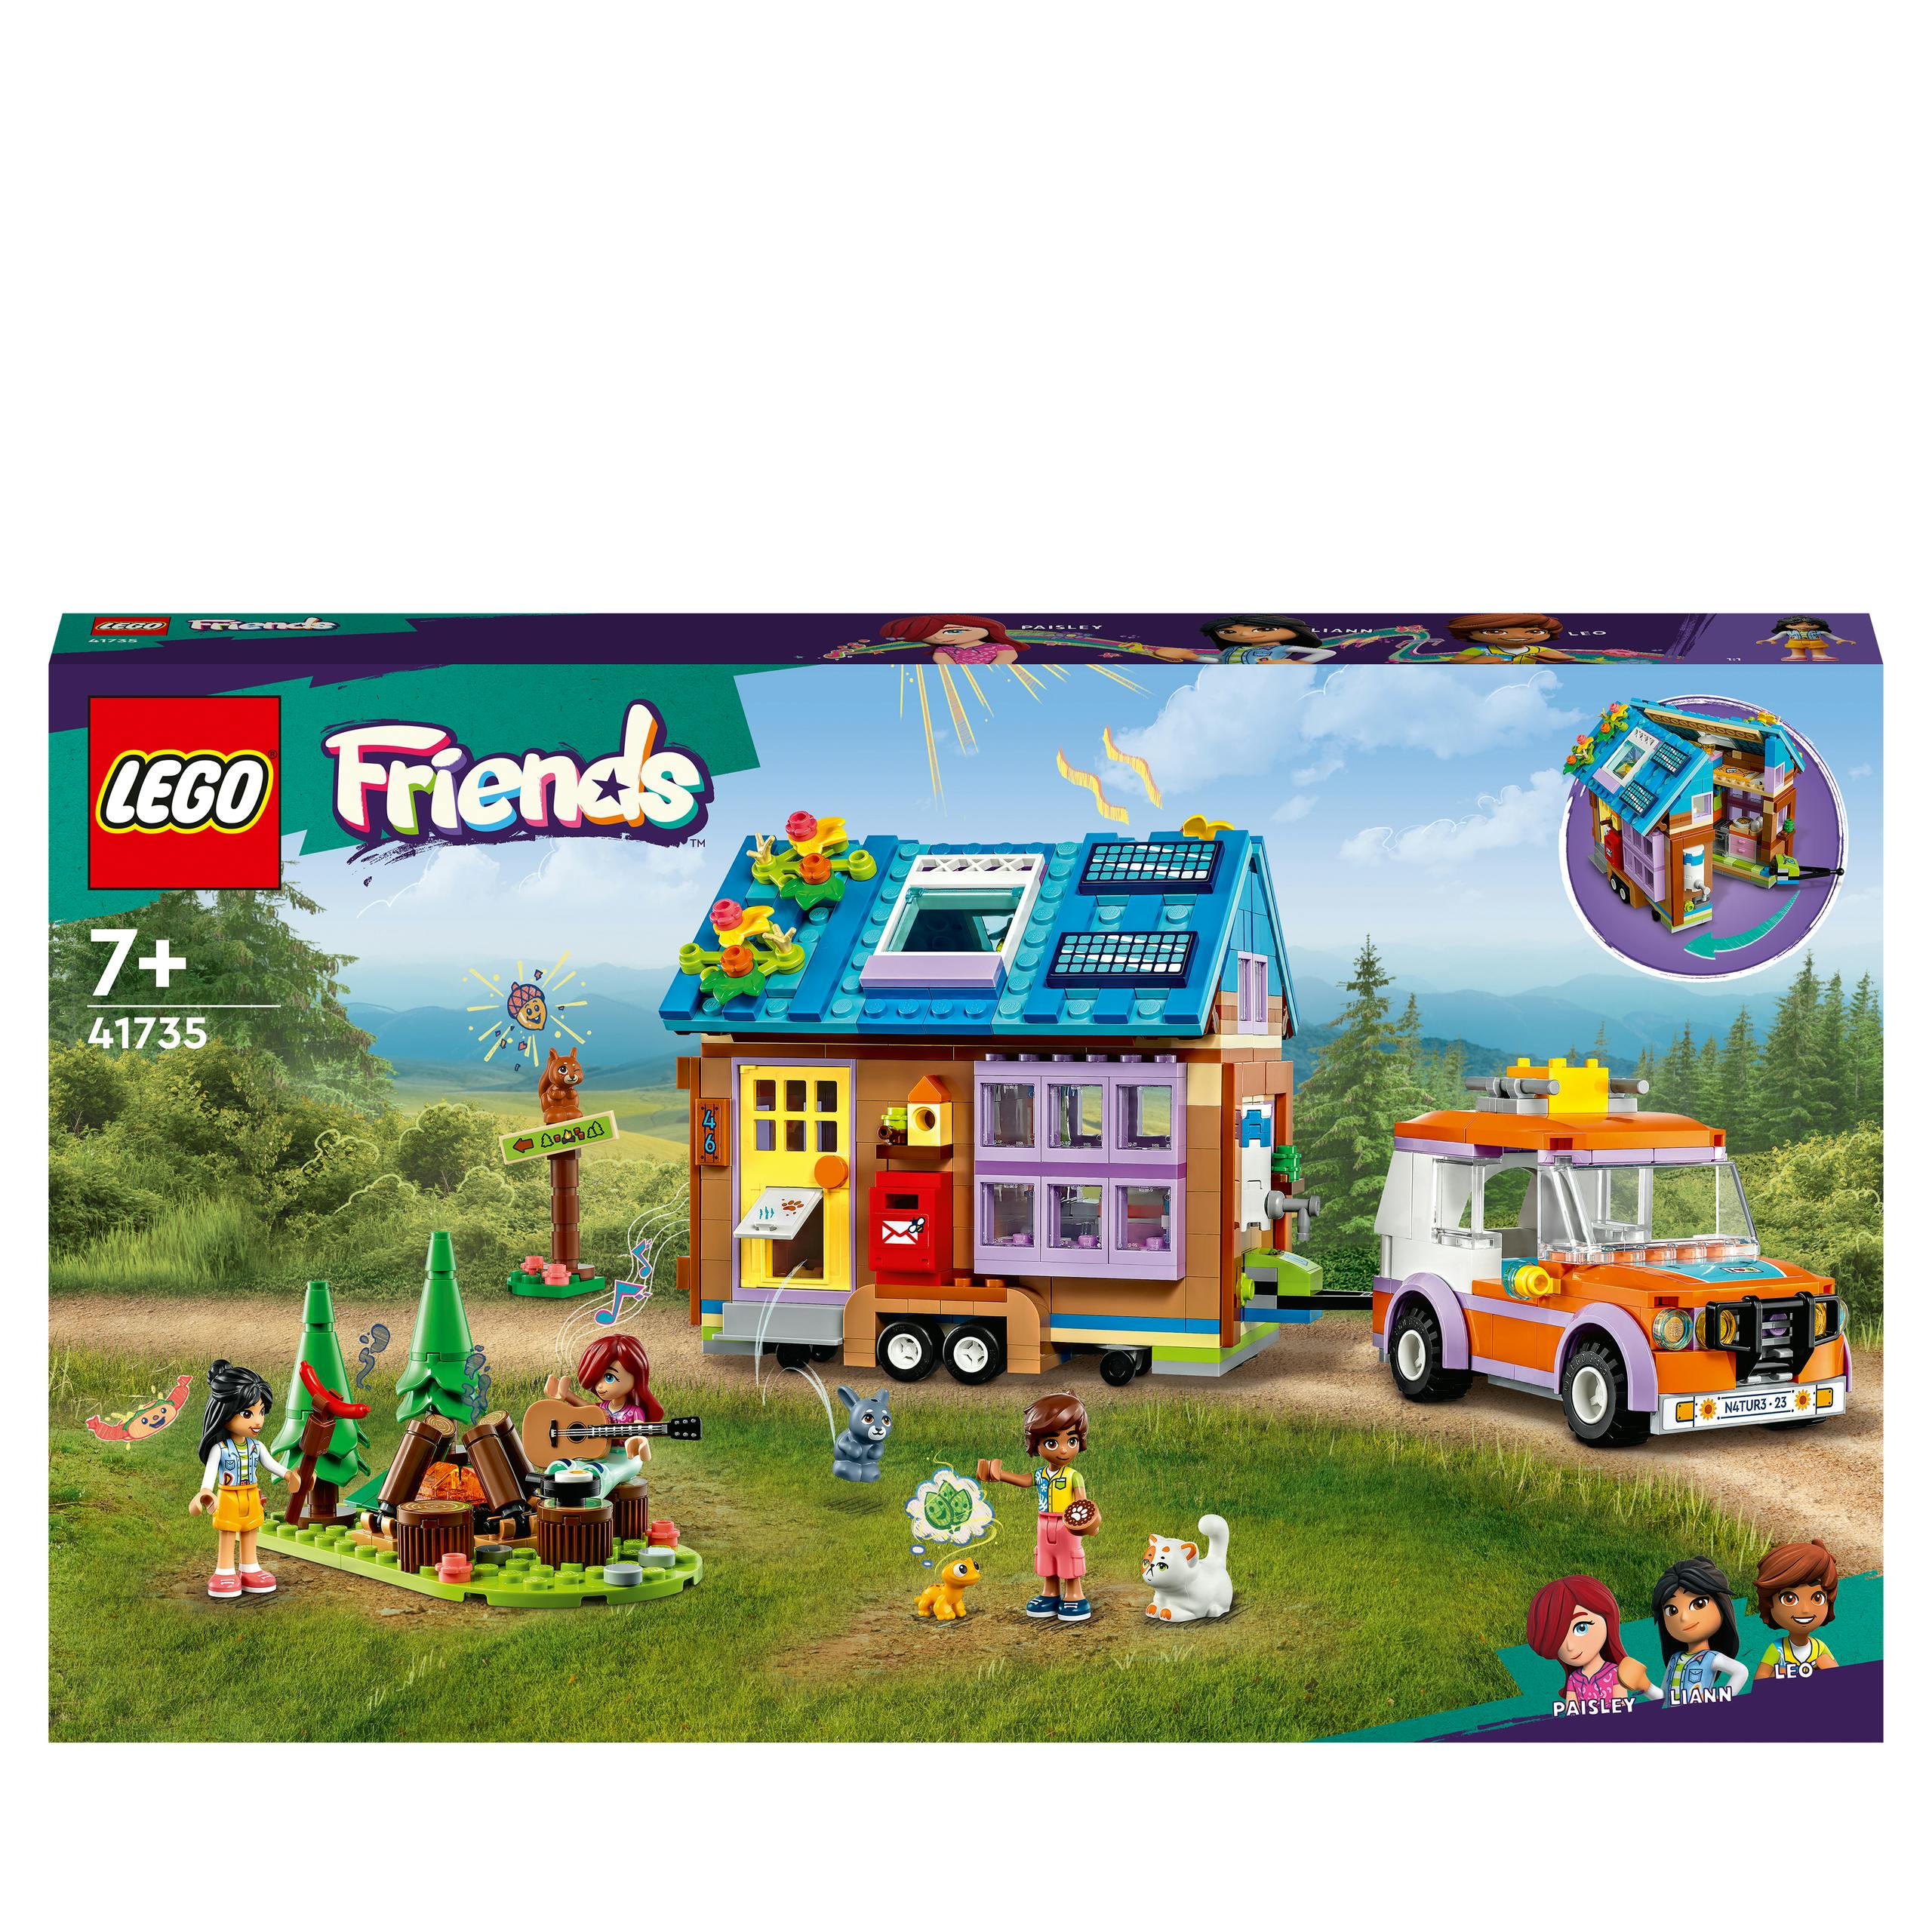 LEGO Friends Tiny House (41735)